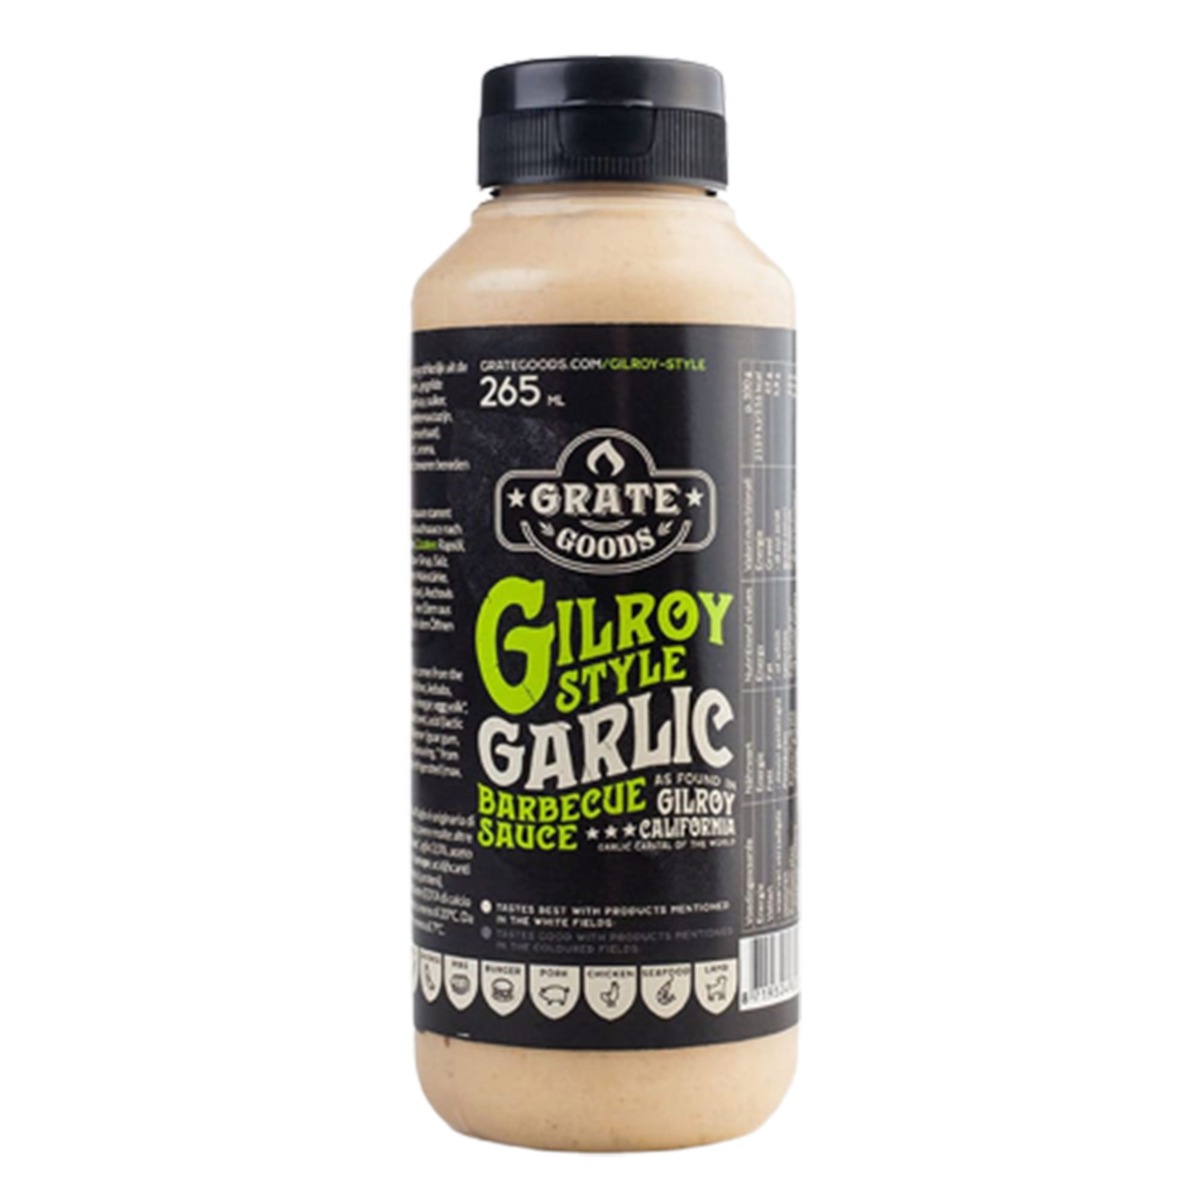 Girloy Garlic BBQ Sauce, 265mL – Grate Goods®